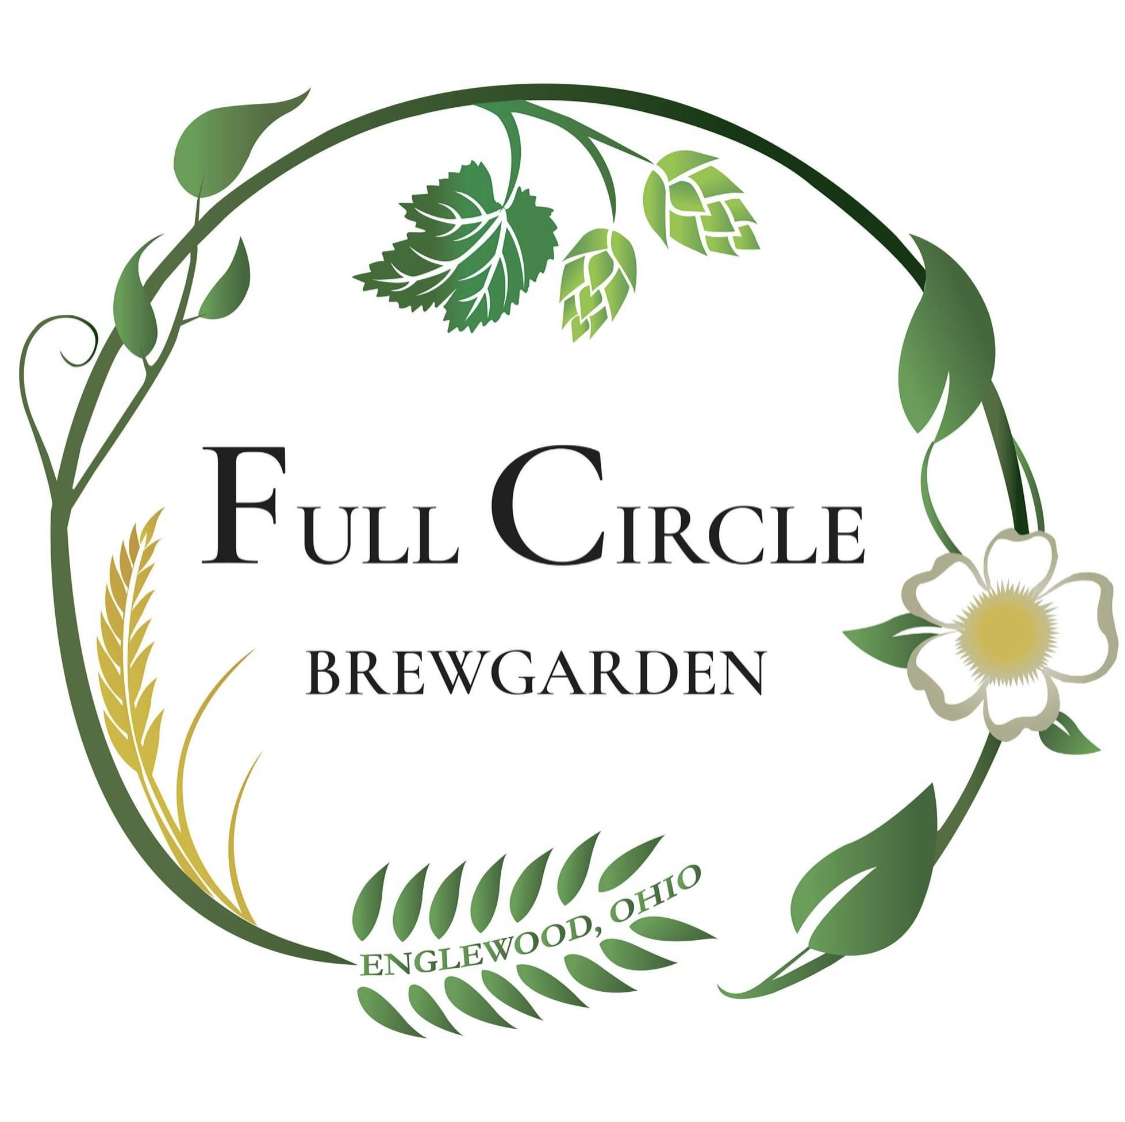 Full Circle Brewgarden